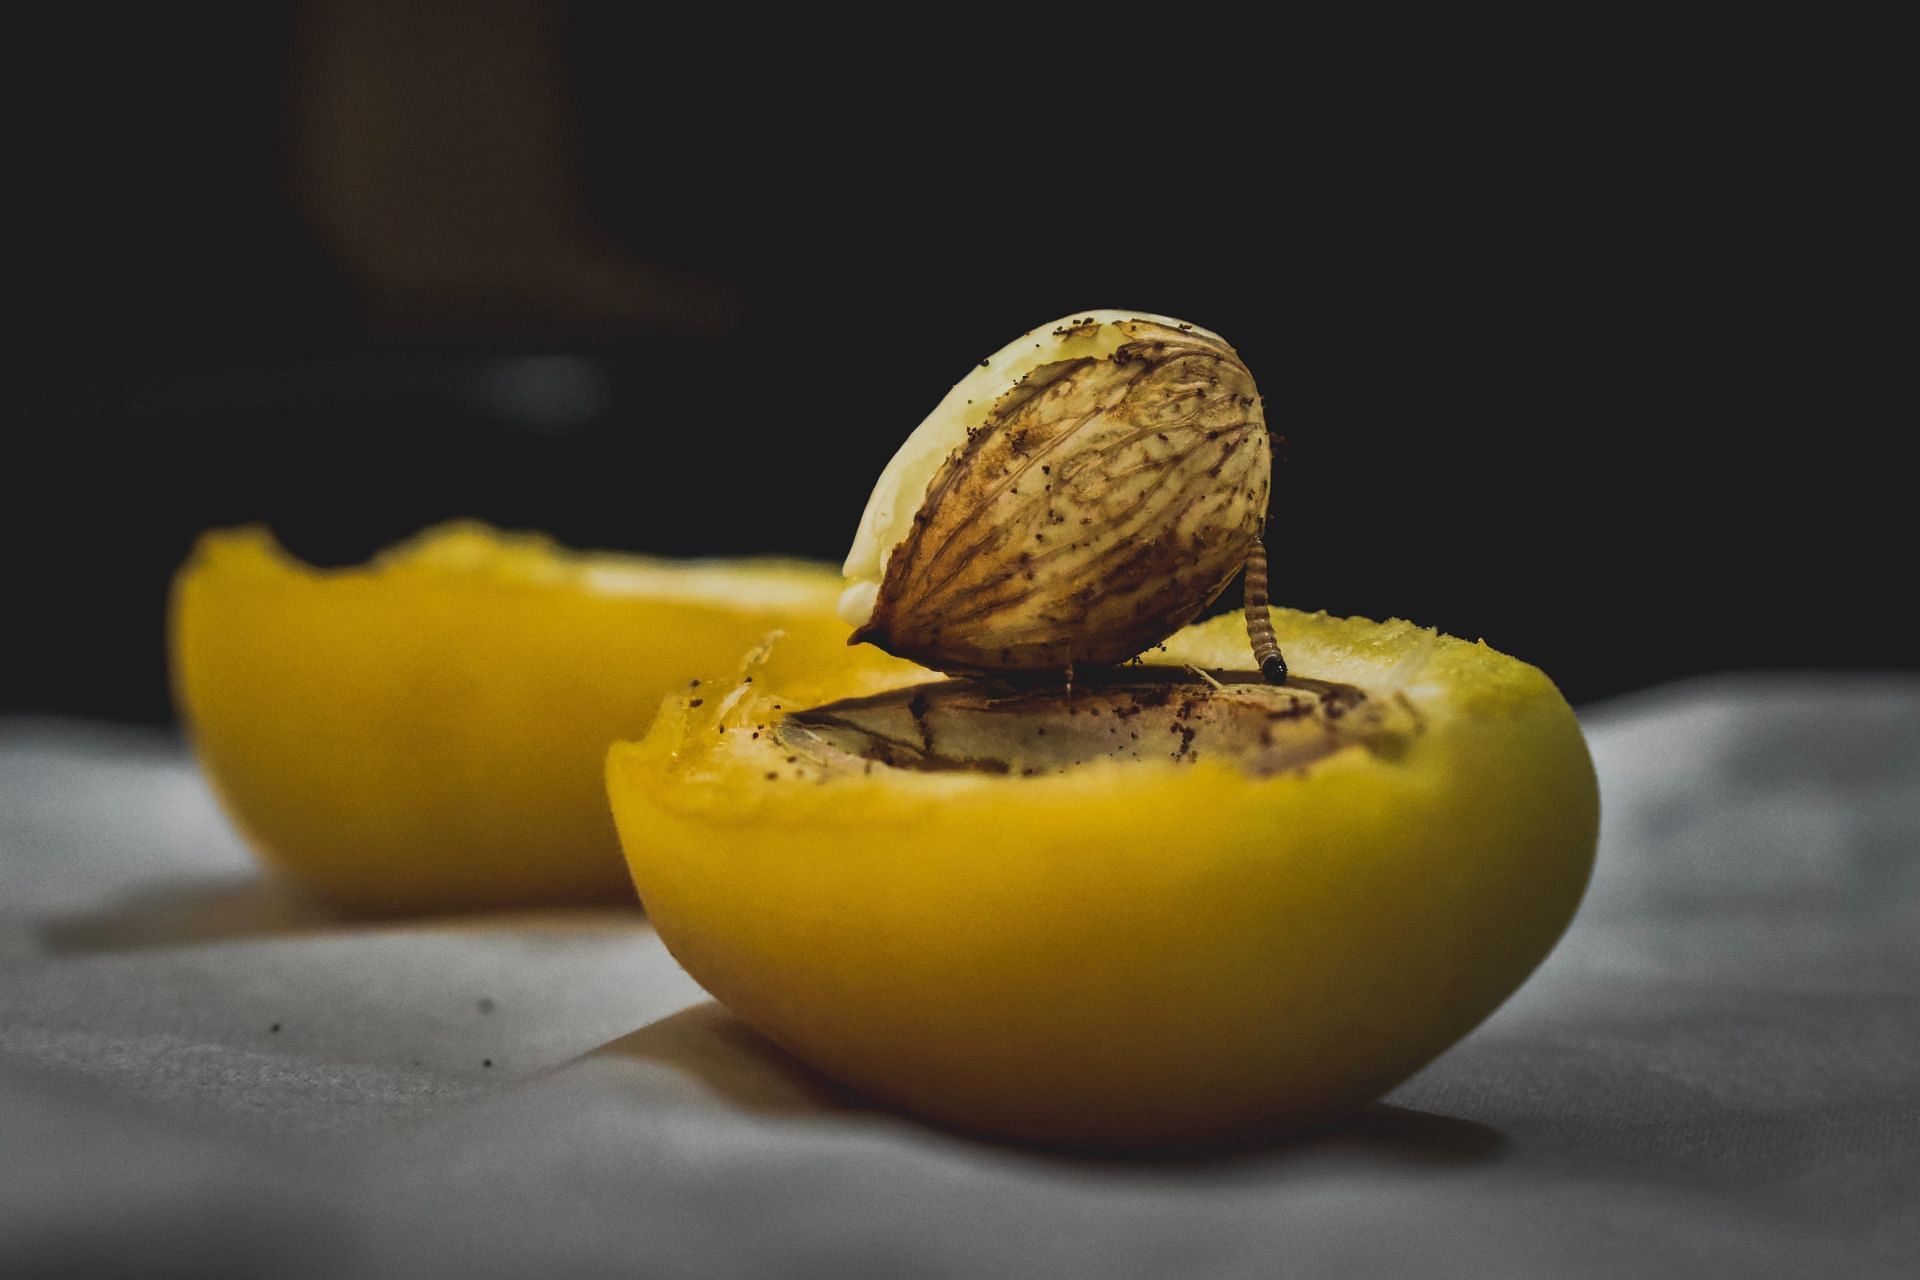 Apricot seeds might be harmful (Image via Unsplash/Payam Tahery)